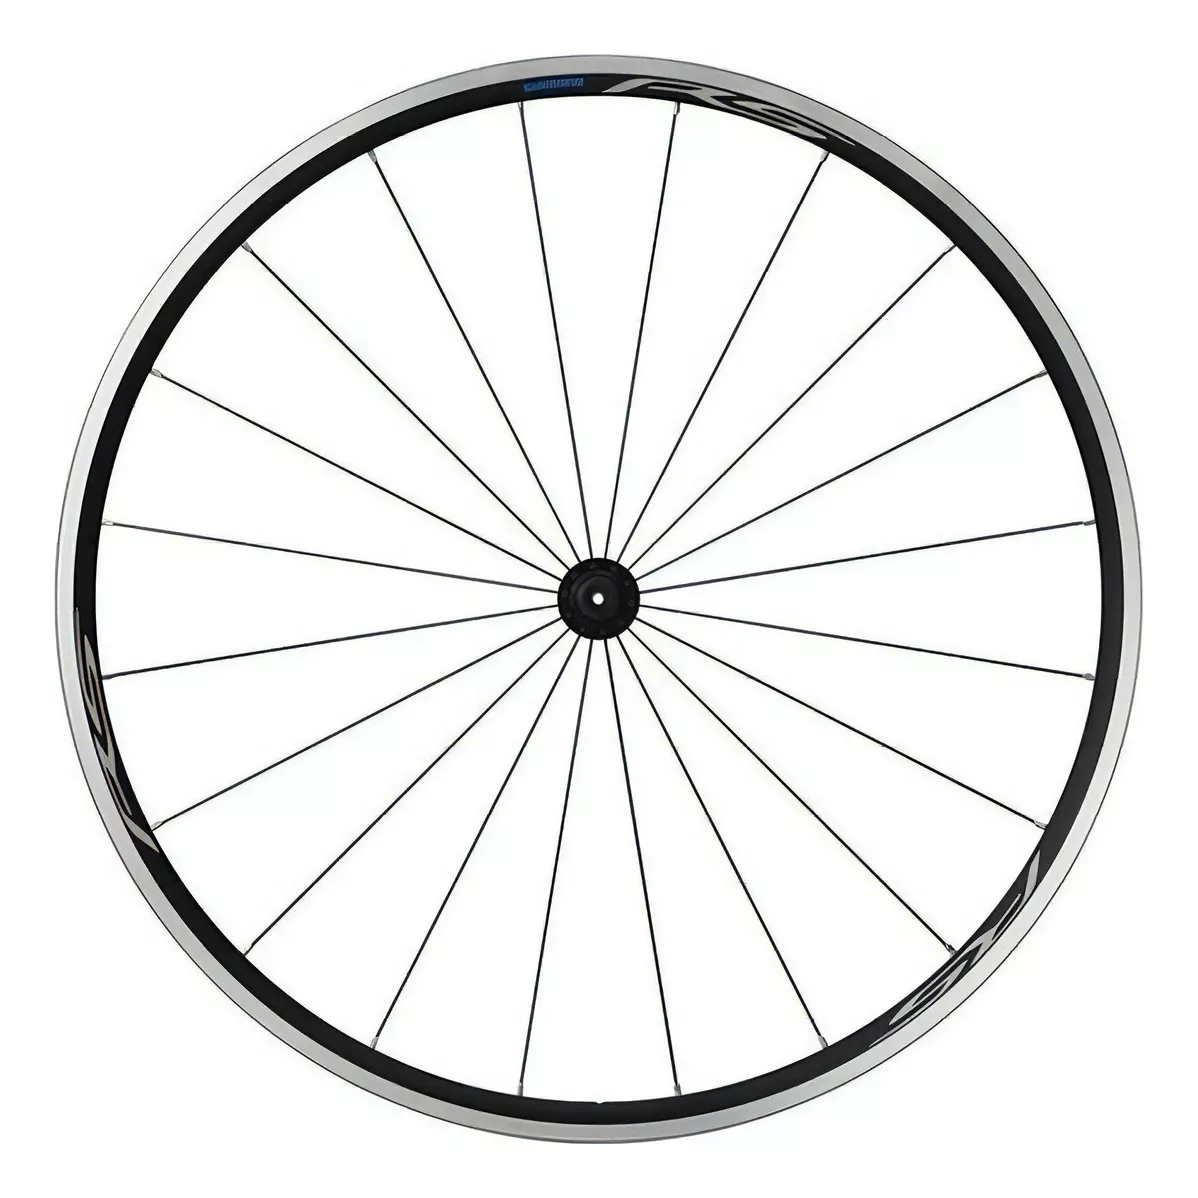 Primera imagen para búsqueda de ruedas bicicleta ruta